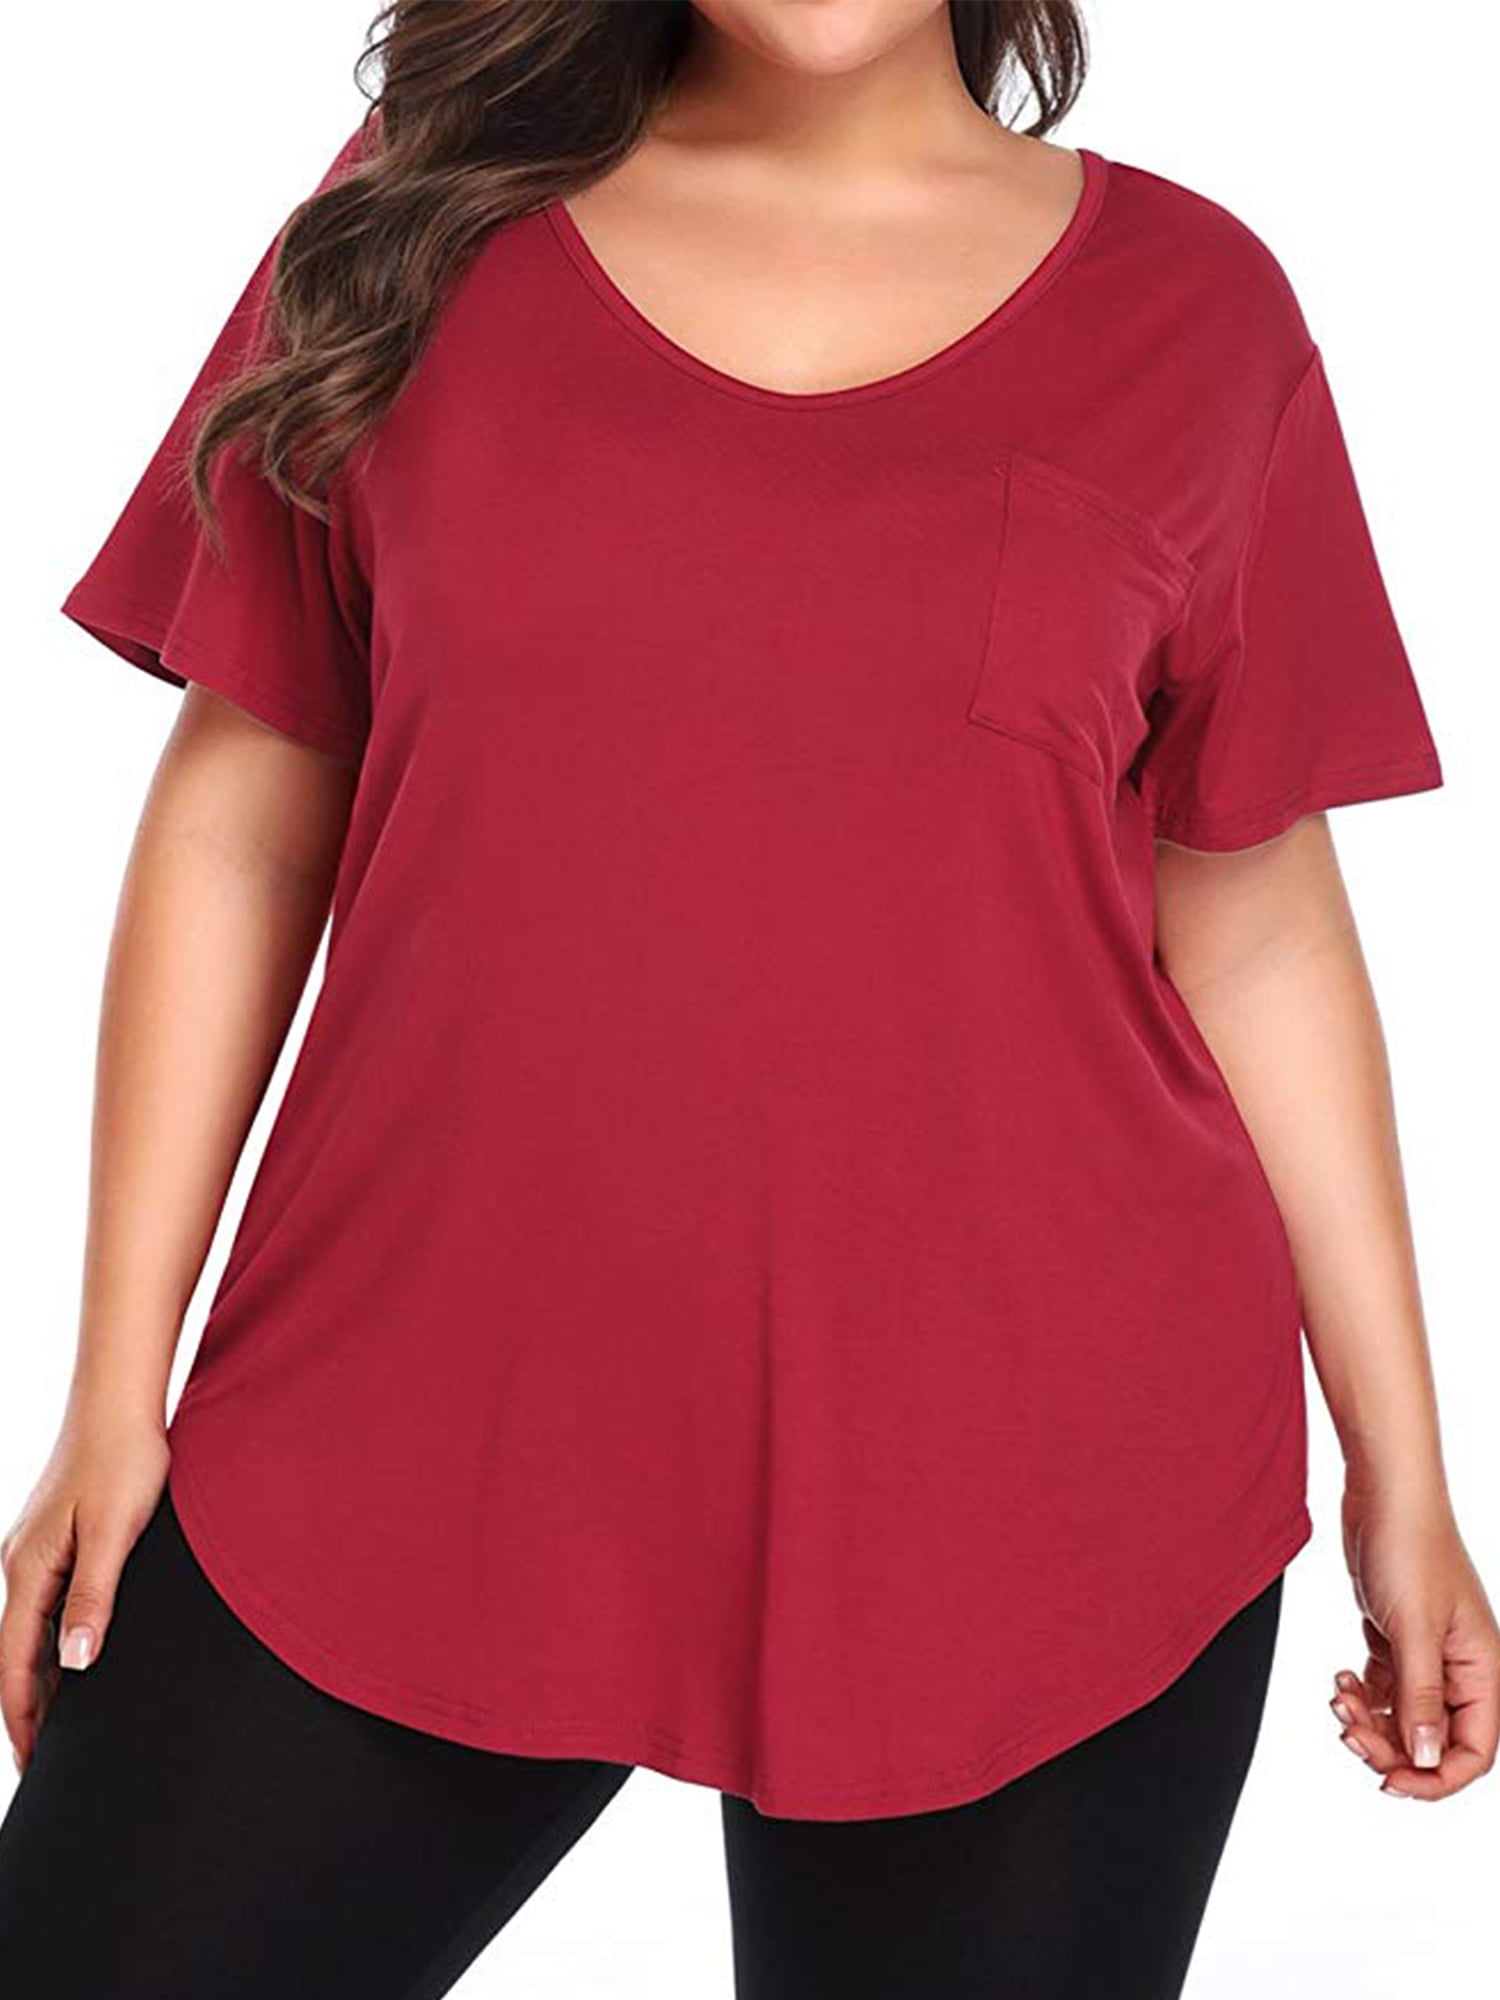 BELAROI Womens Plus Size Tunic Tops 3/4 Sleeve V Neck T Shirts Basic Tee Loose Blouses with Pocket